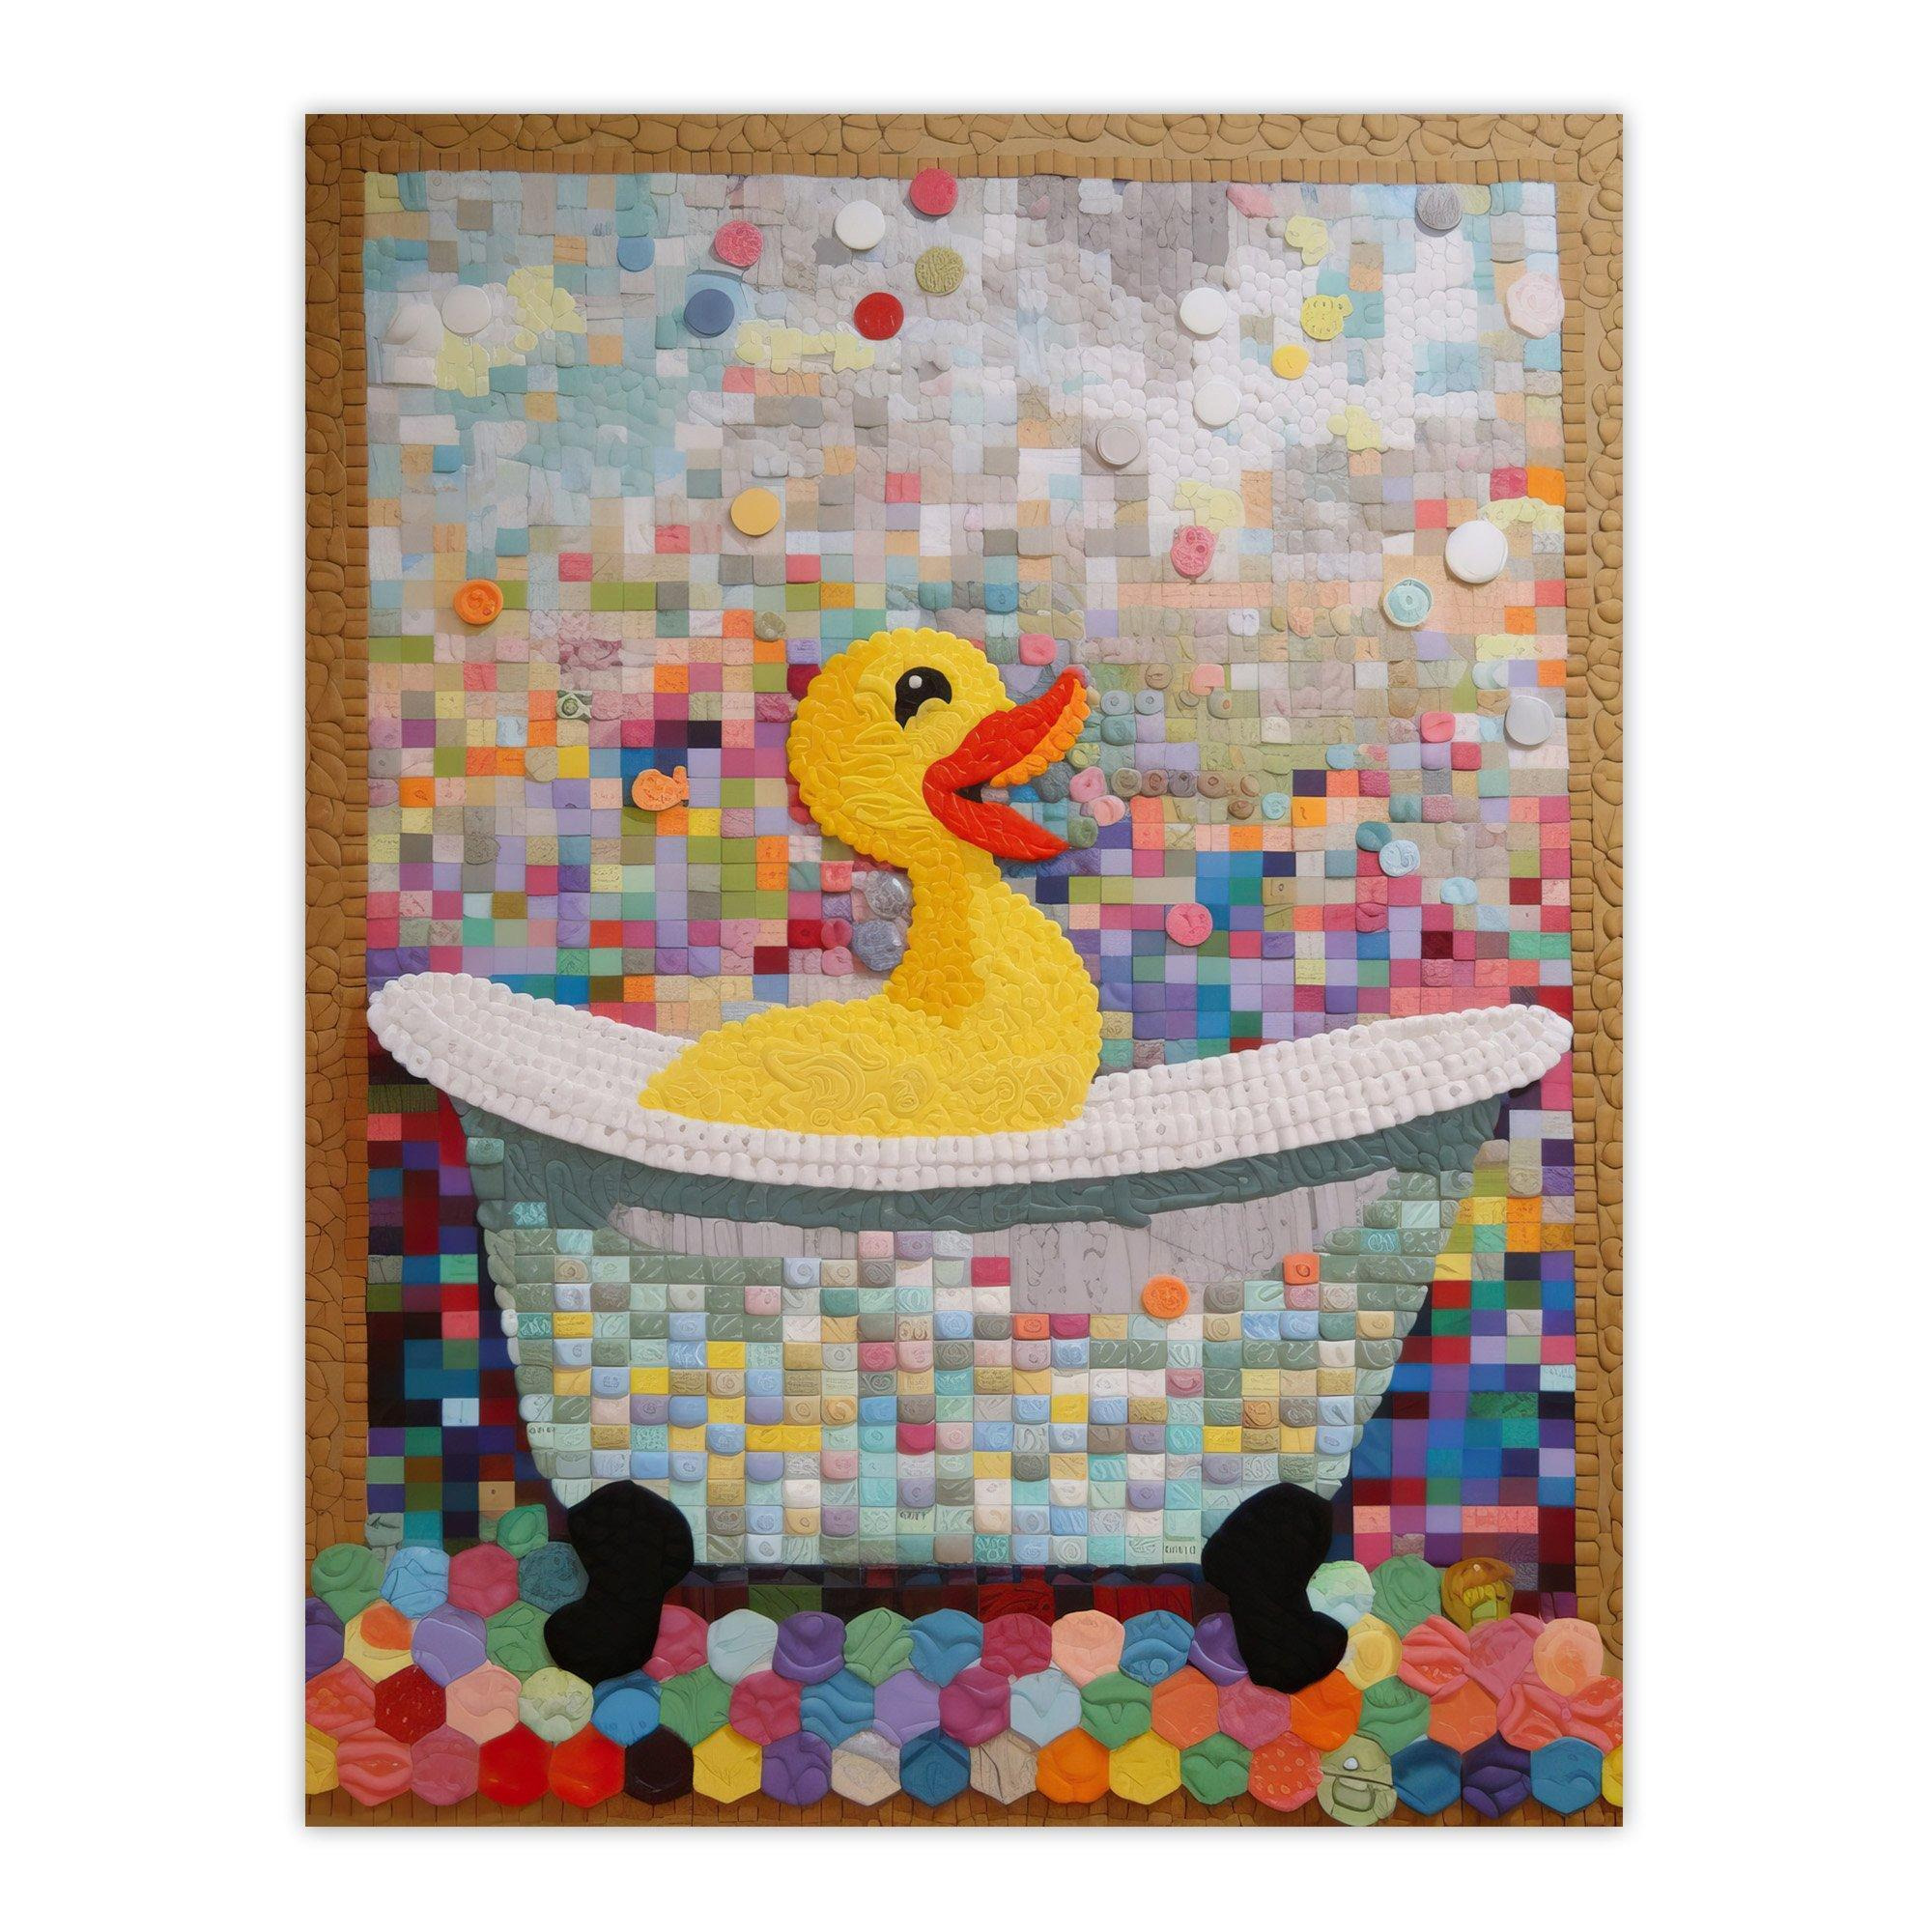 Yellow Rubber Duck Ducky Bath Time Bathroom Toilet Art Yellow Mosaic Kids Room Nursery Unframed Wall Art Print Poster Home Decor Premium - image 1